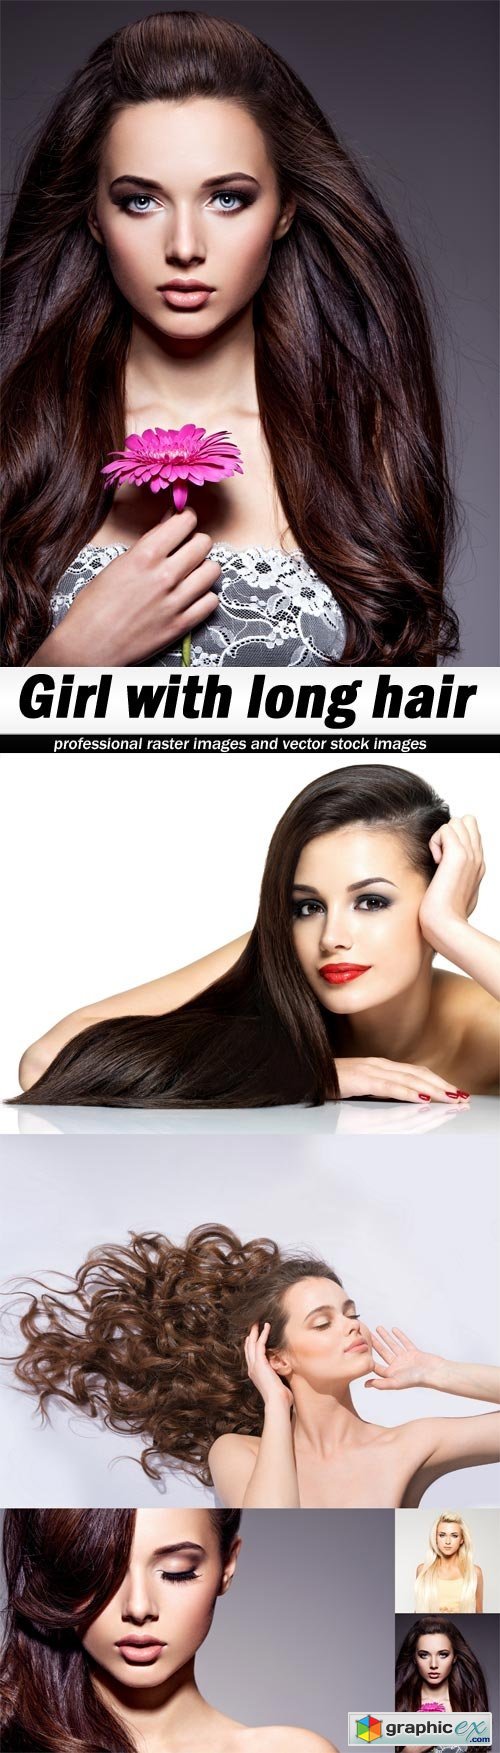 Girl with long hair-5xJPEGs